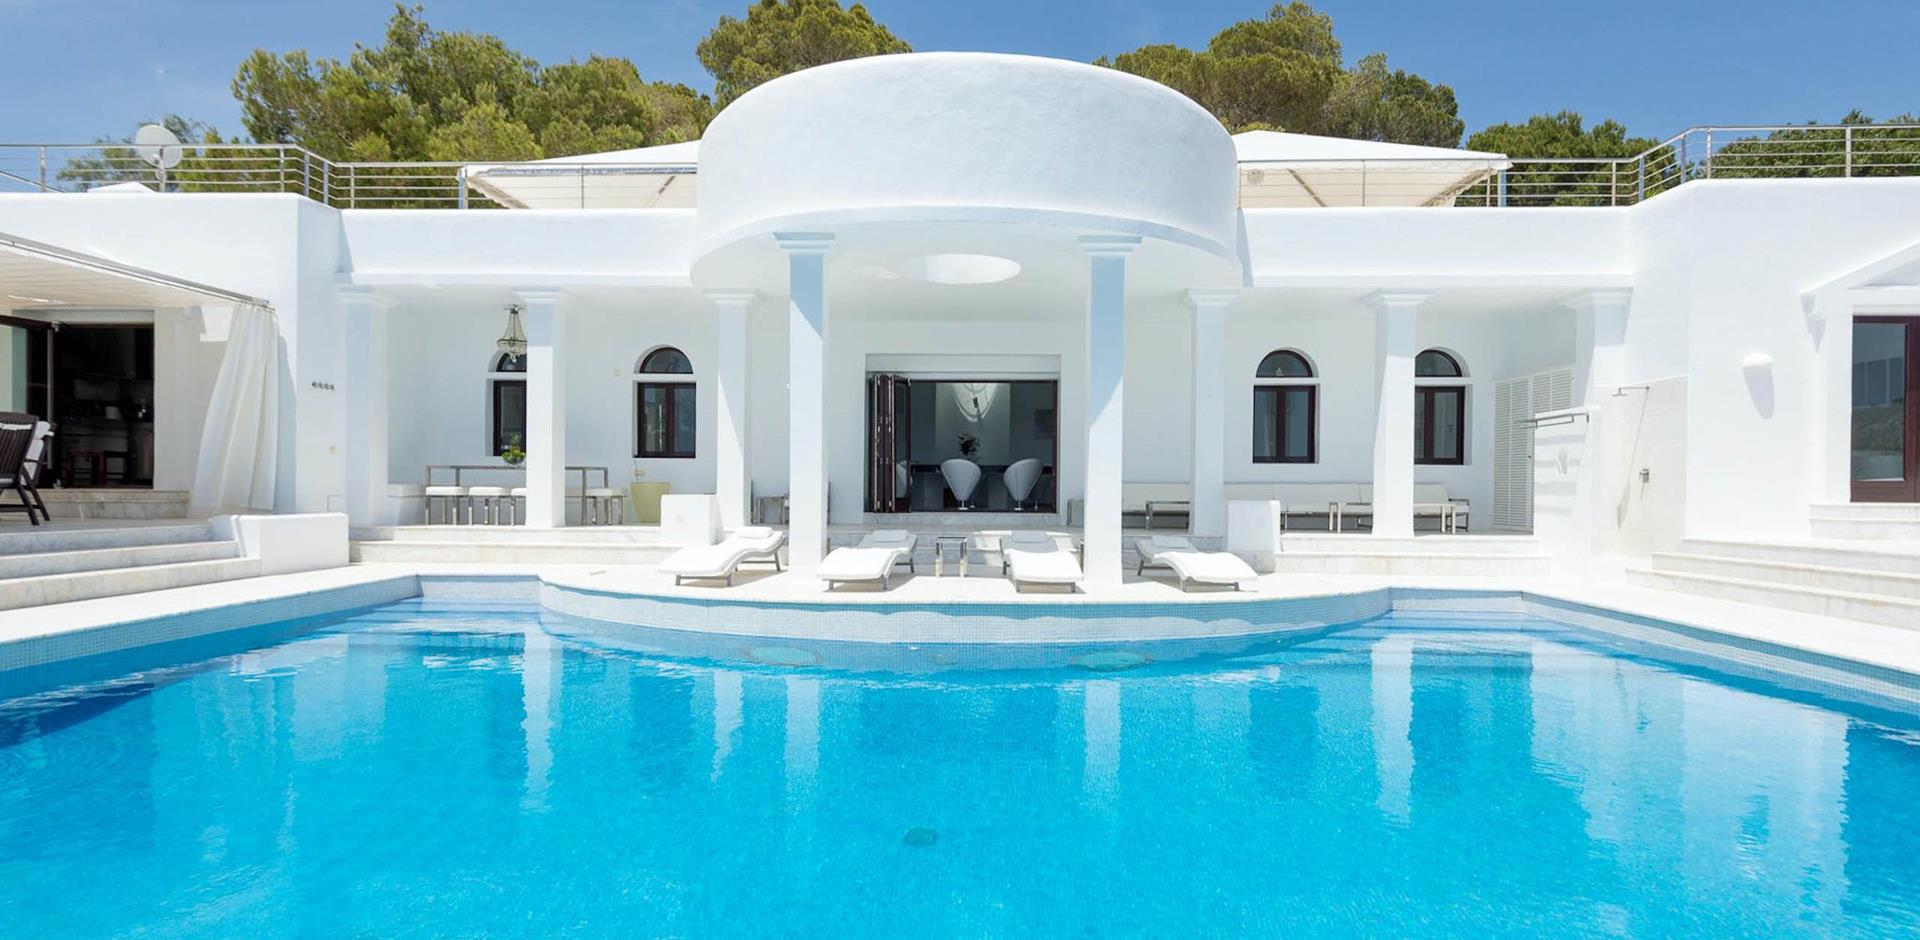 Pool Villa Infinito, Ibiza